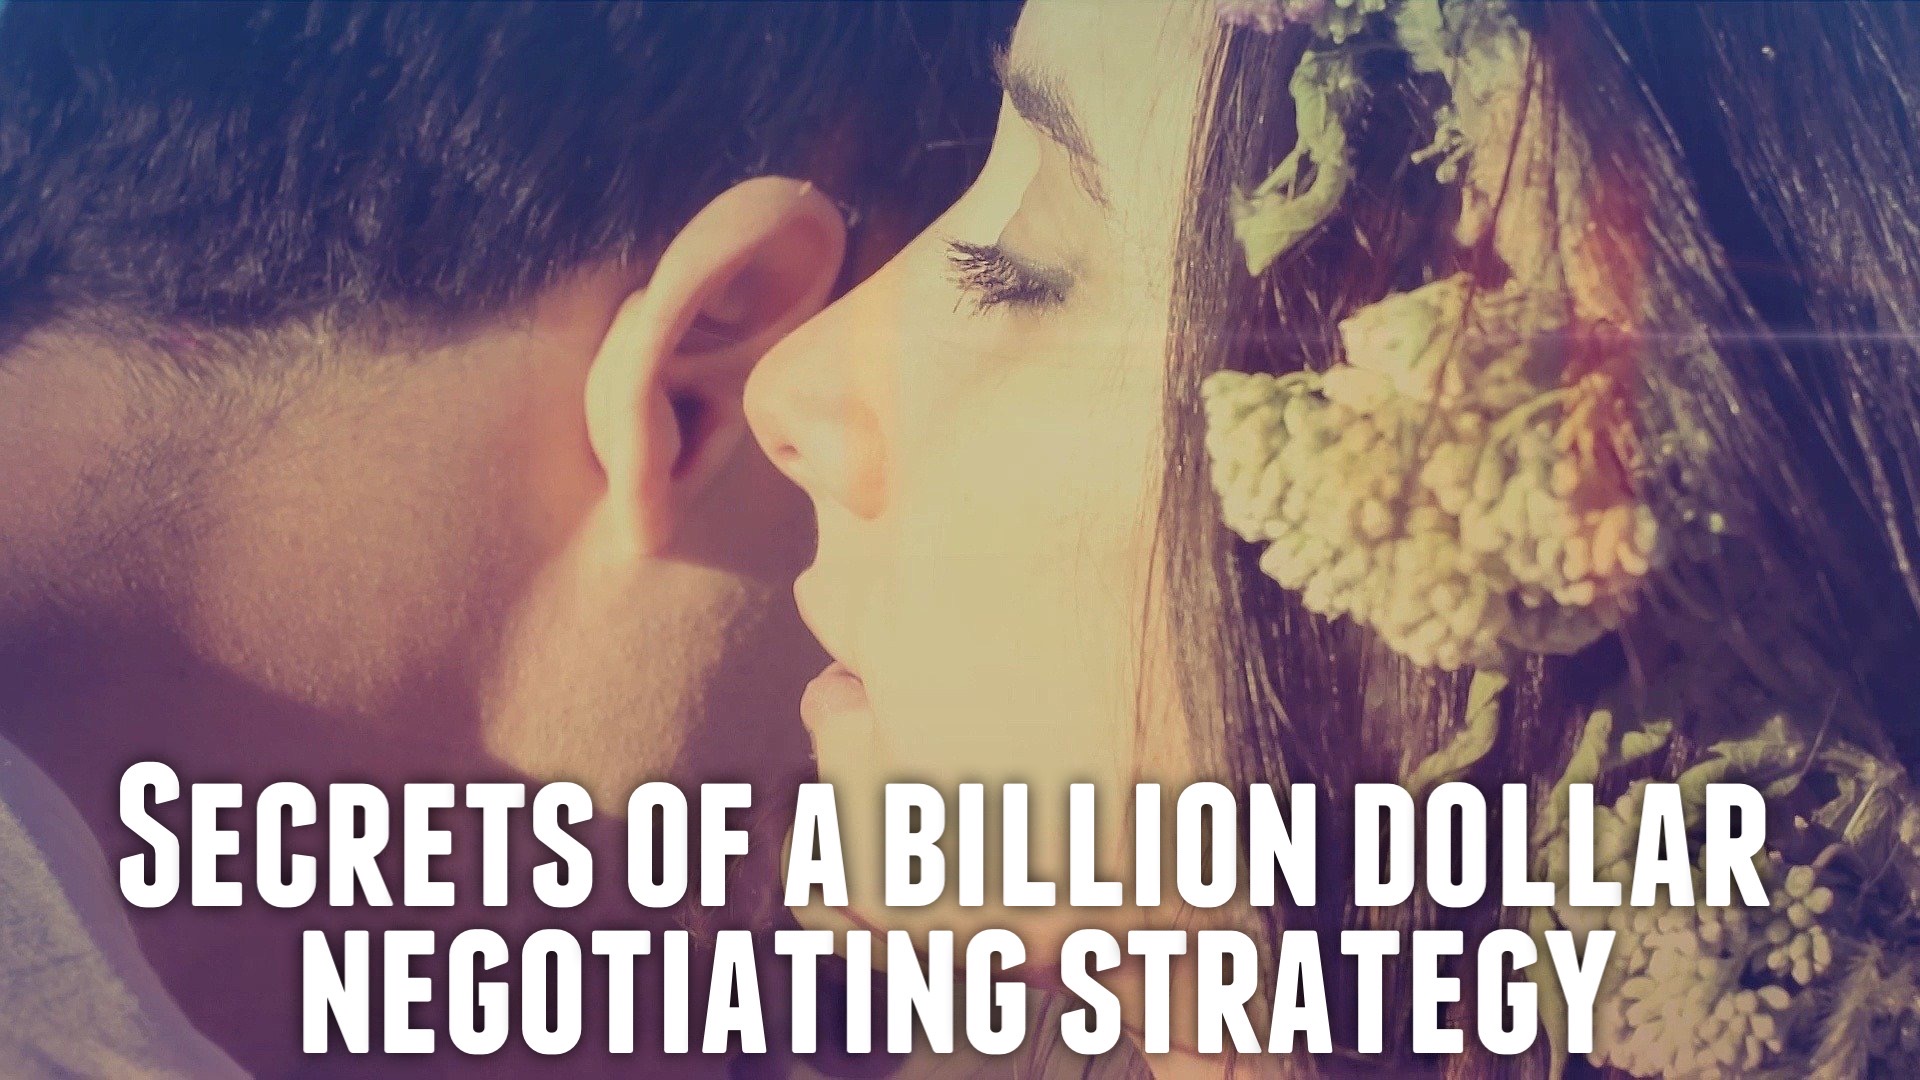 Secrets of a billion dollar negotiating strategy